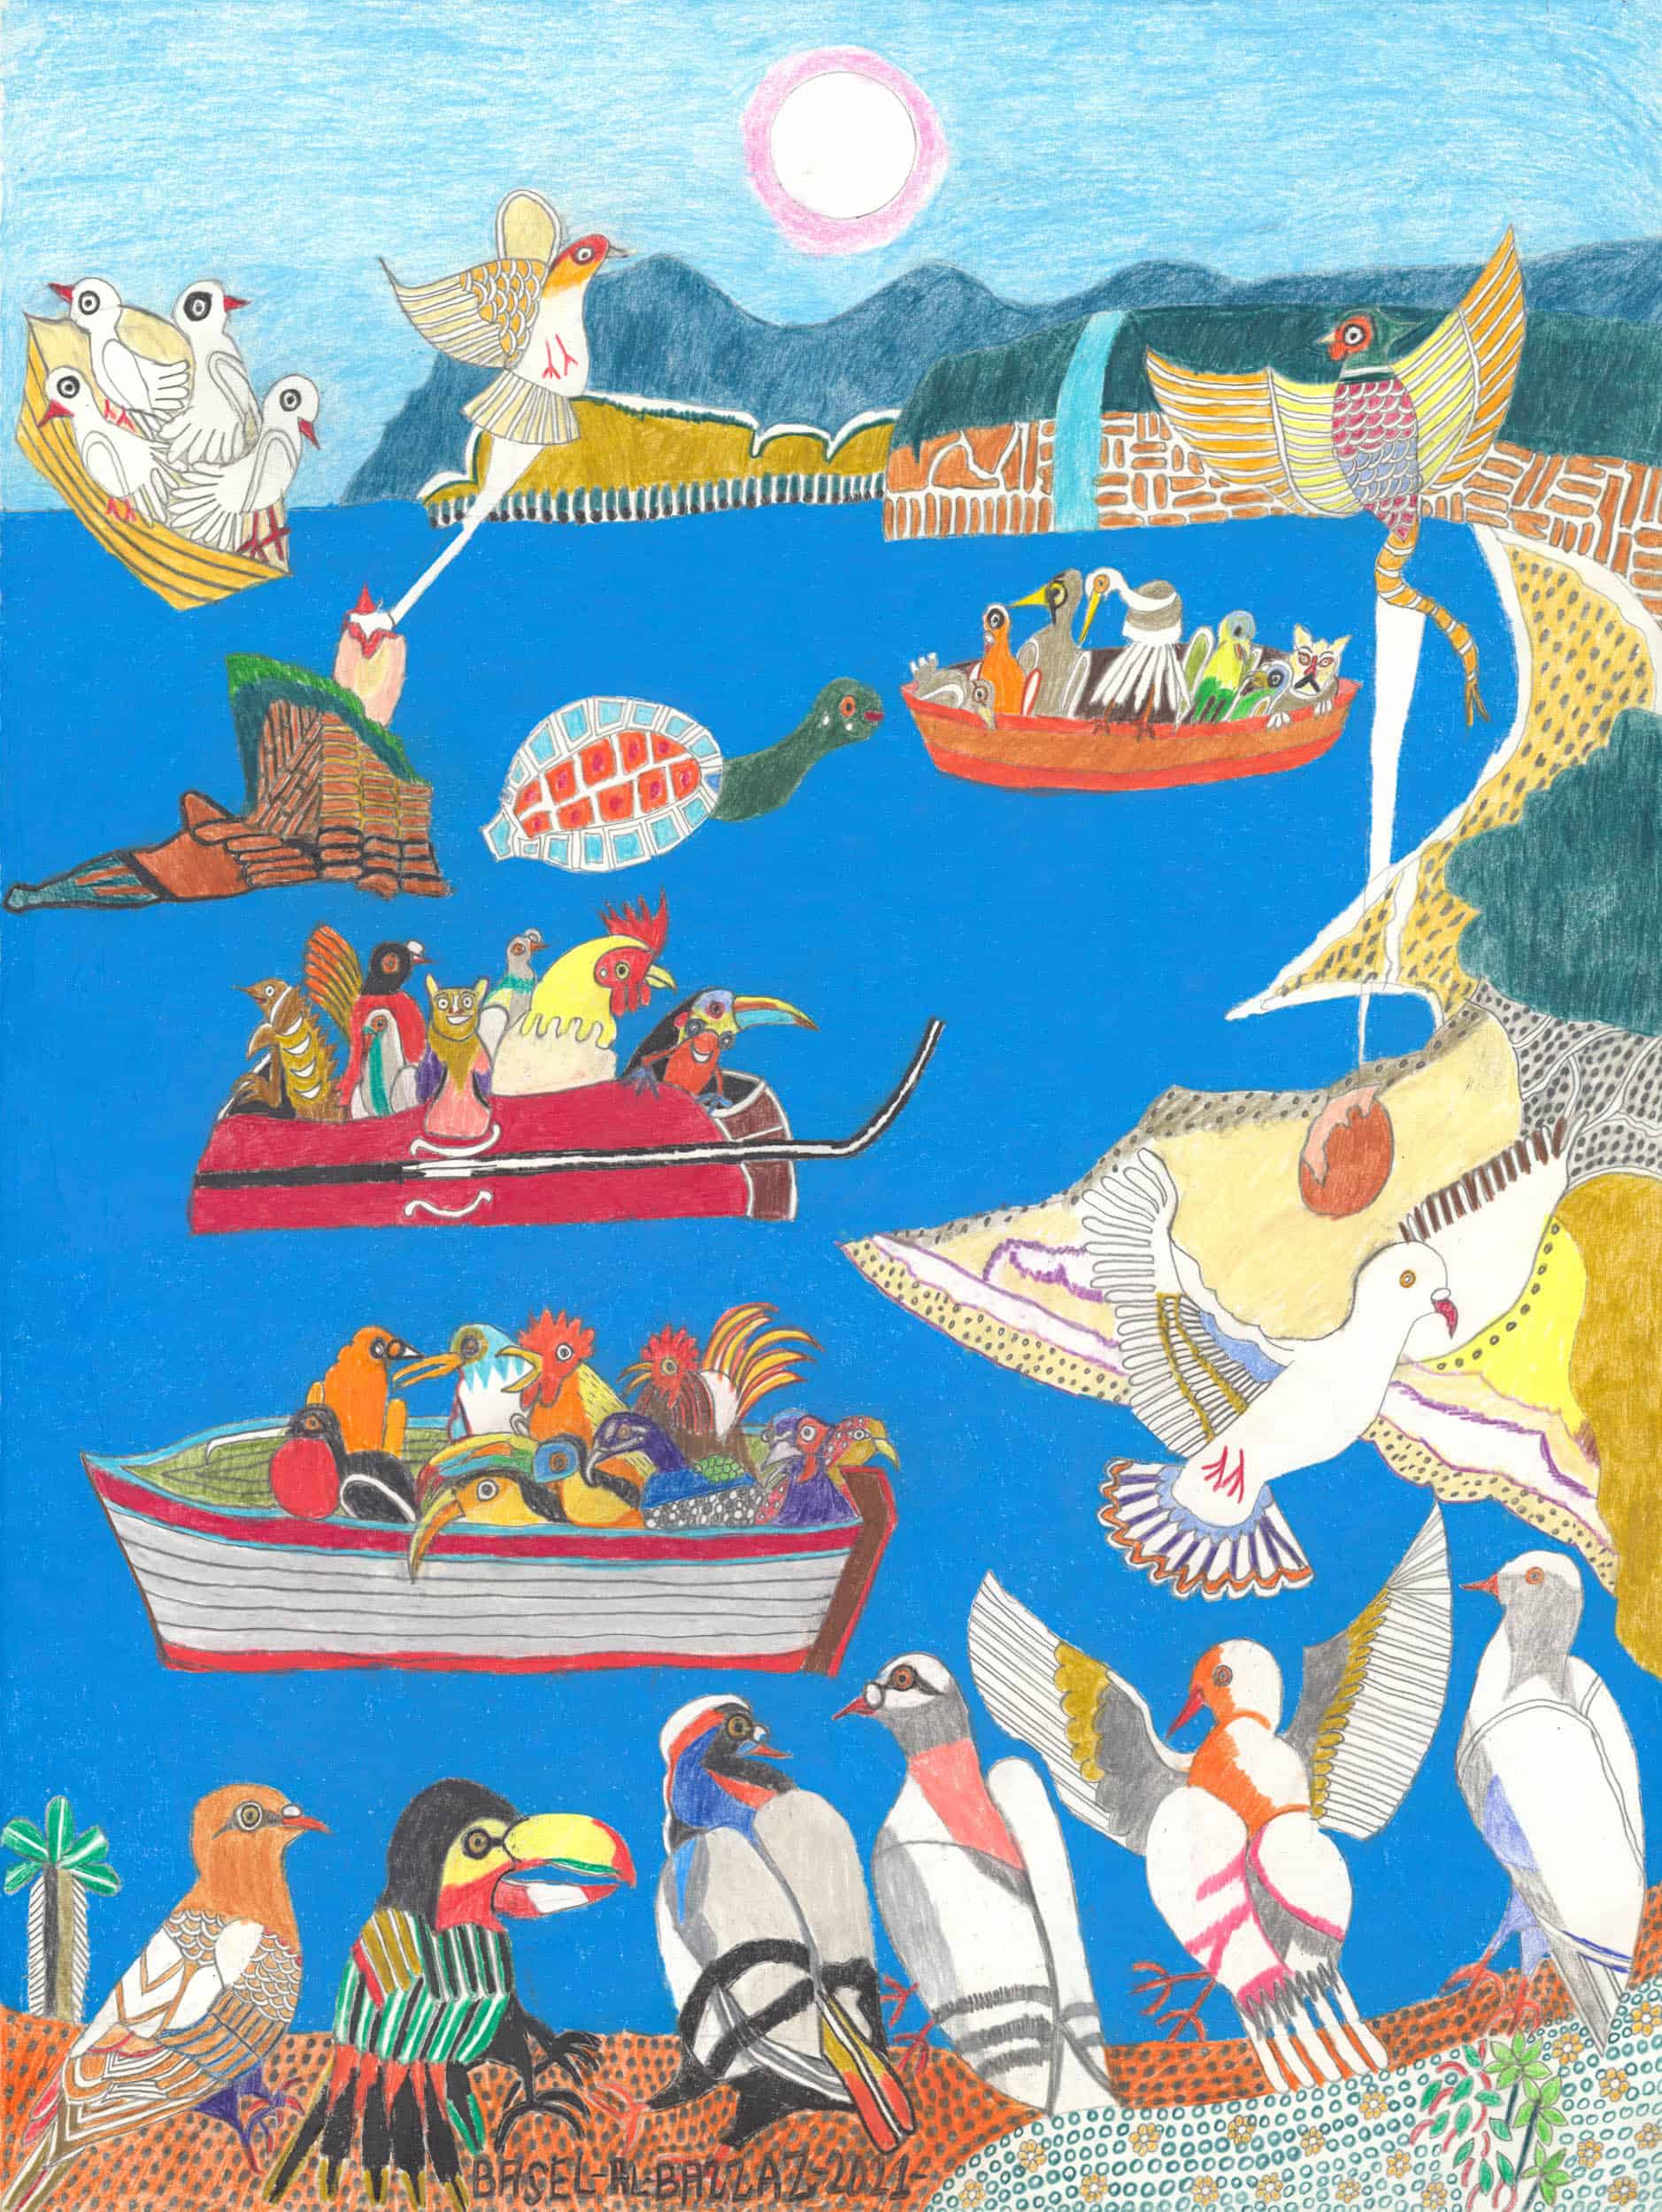 al-bazzaz basel - Arche Noah der Vögel / Noah's Ark of birds